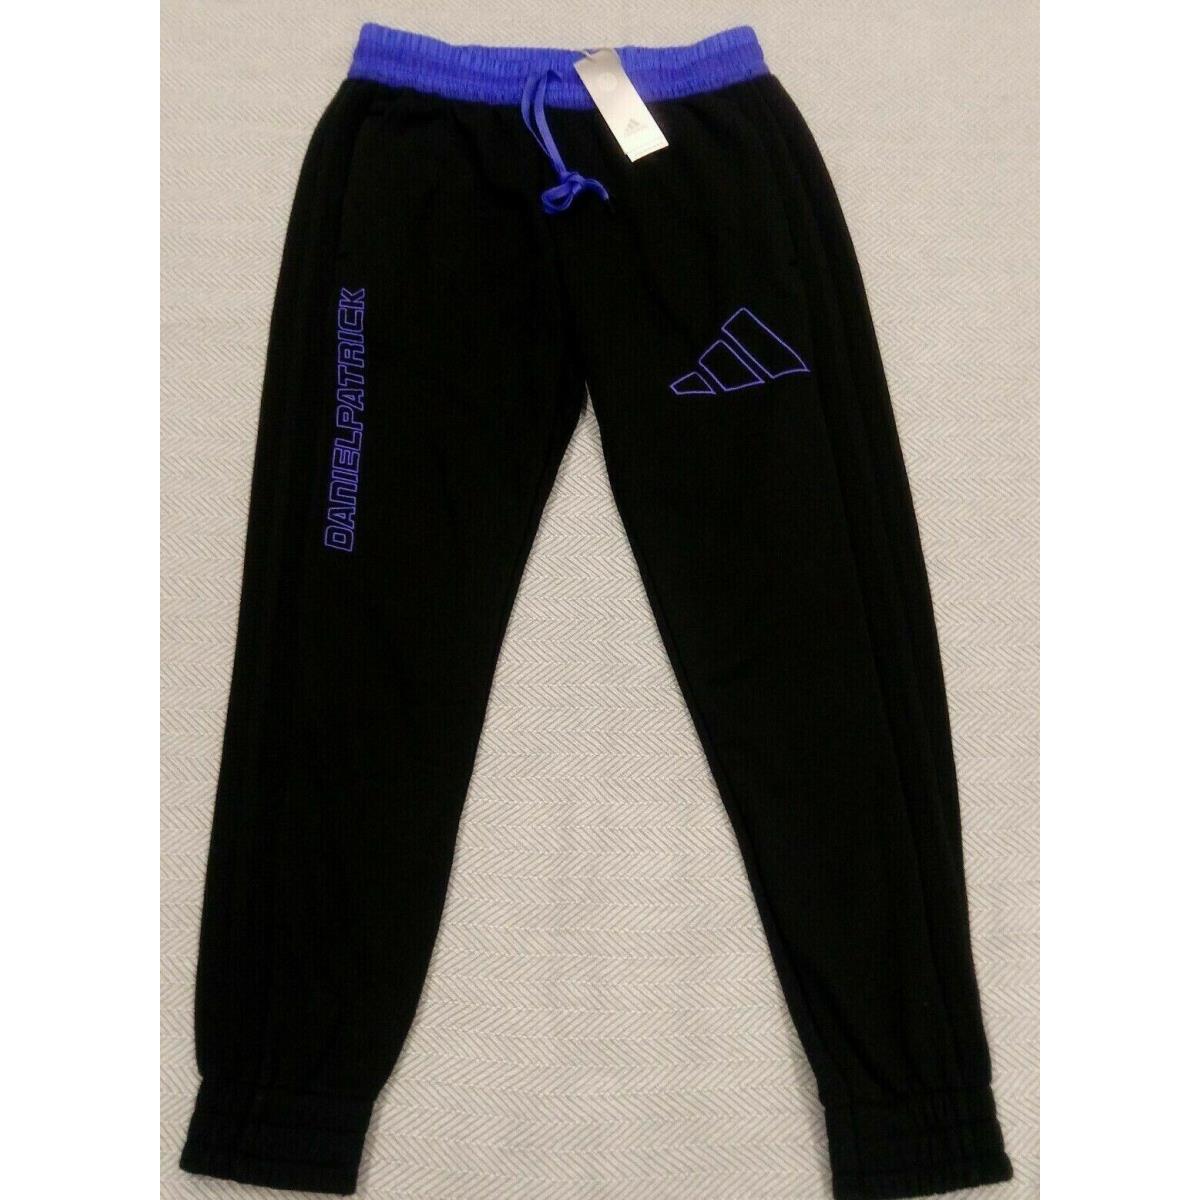 Adidas X Daniel Patrick Hoops Basketball Pants Black Blue GU2285 Mens Sz L